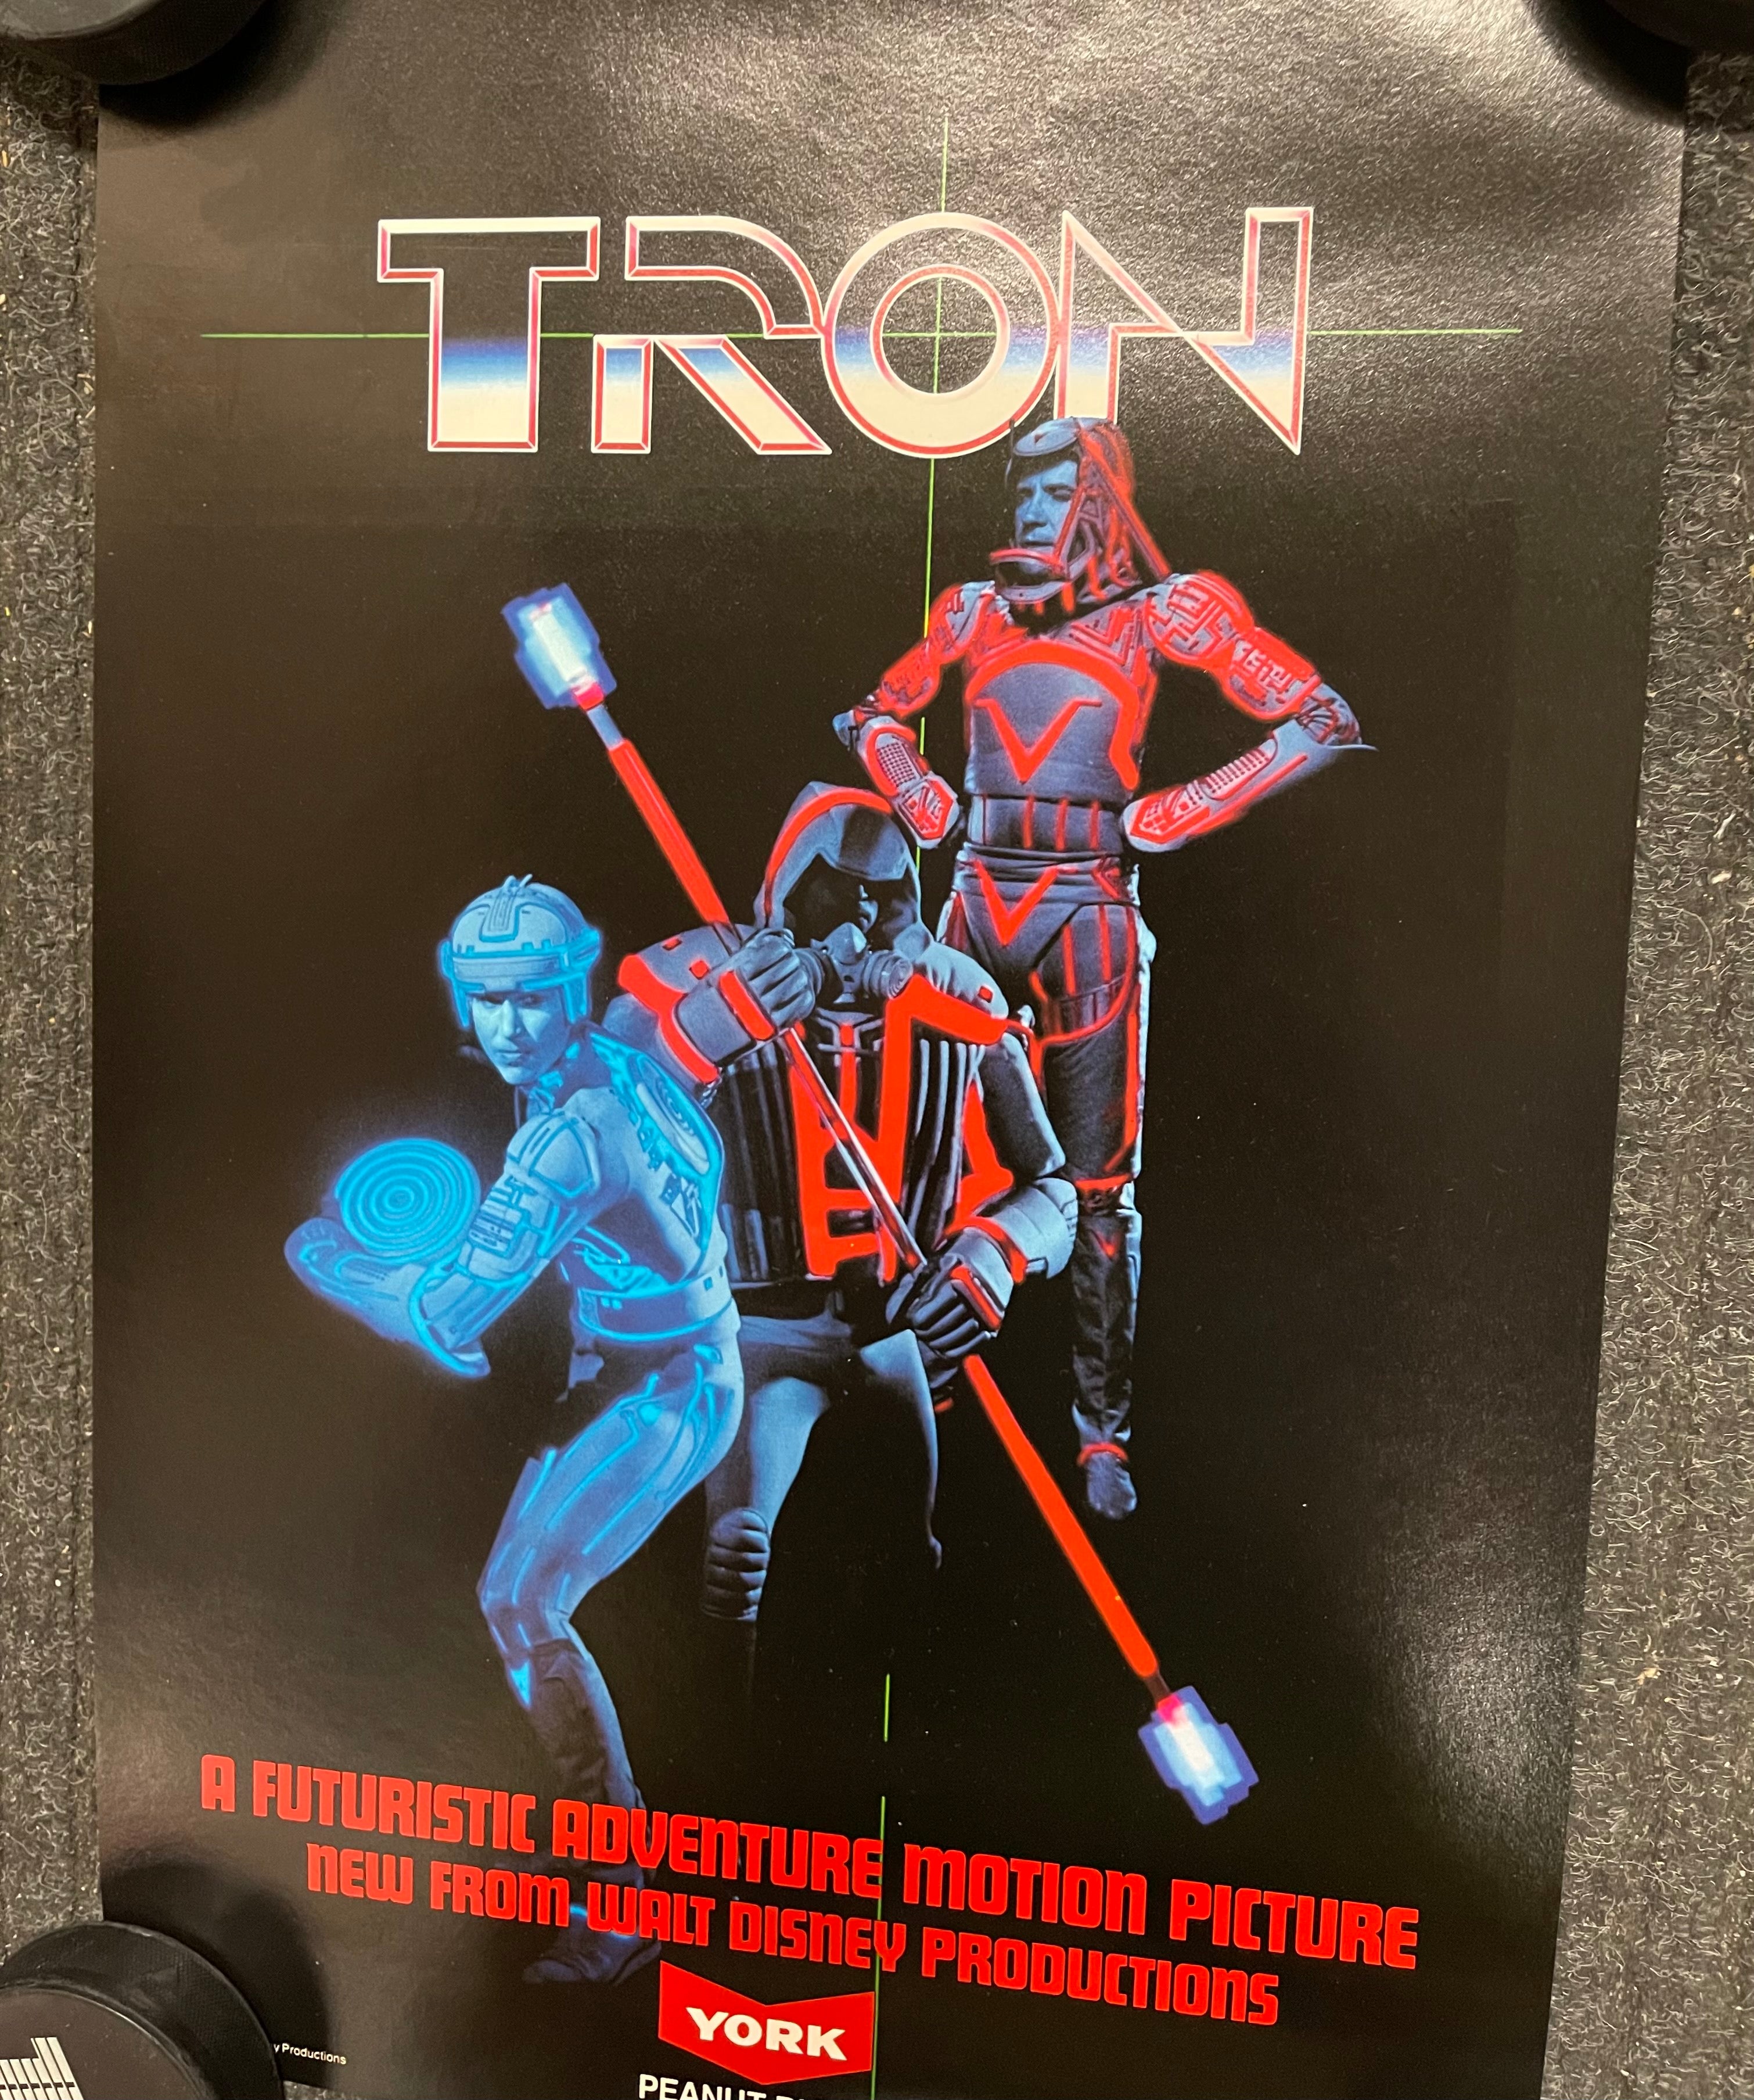 Tron movie original vintage poster 1981